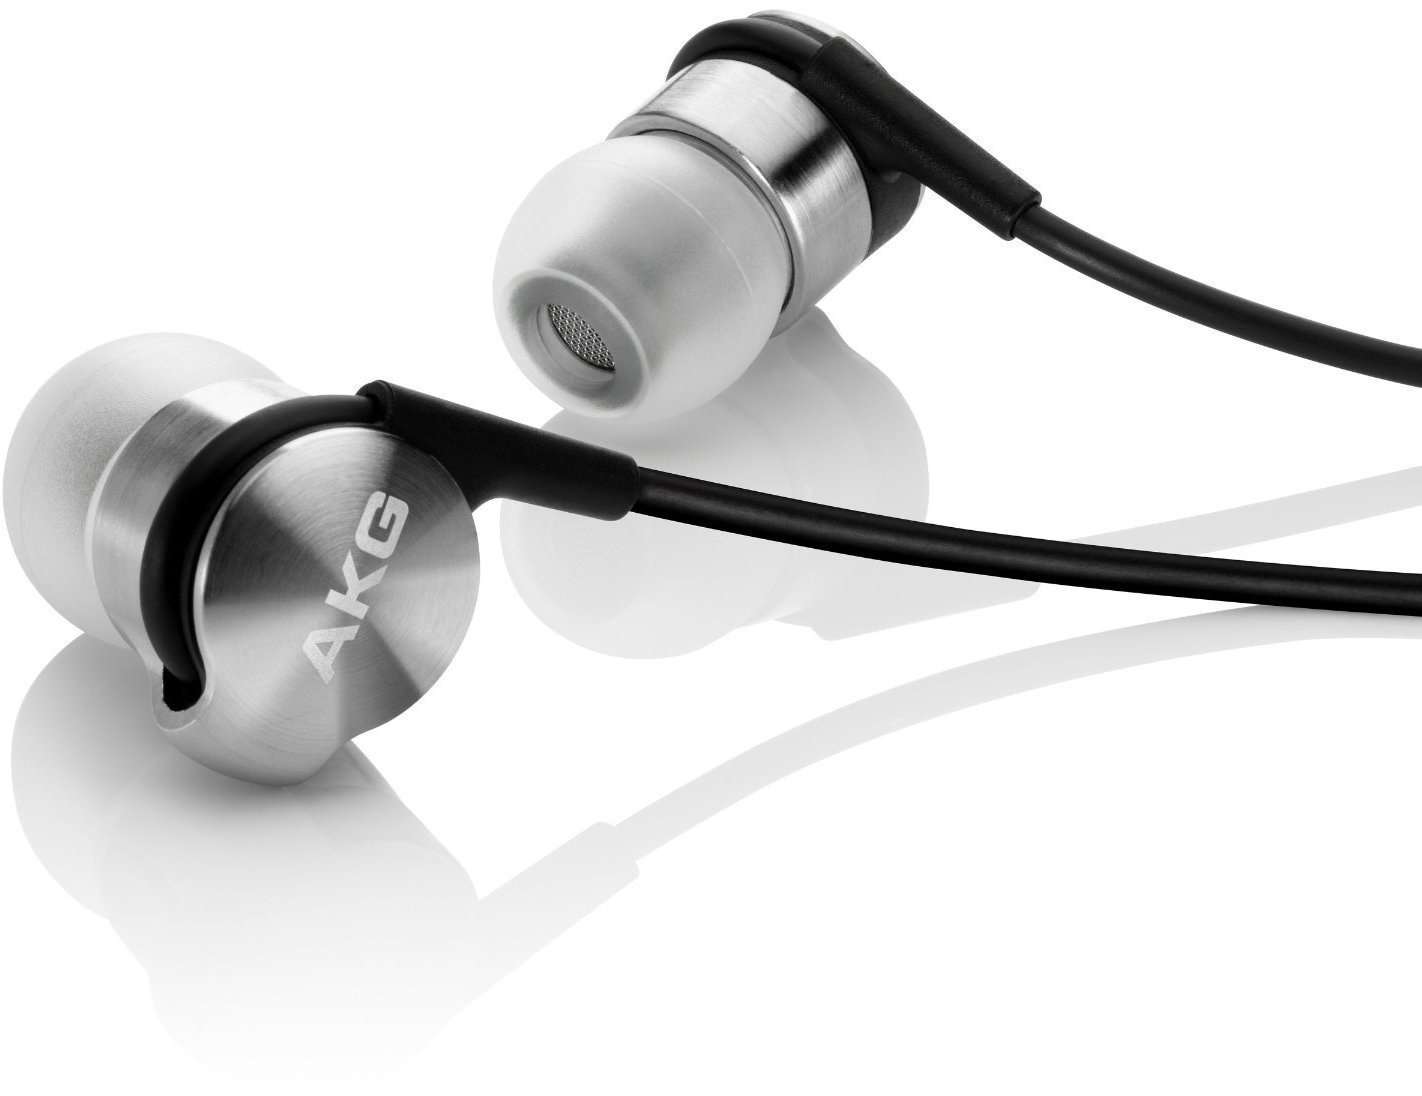 In-Ear Headphones AKG K3003i Black-Chrome